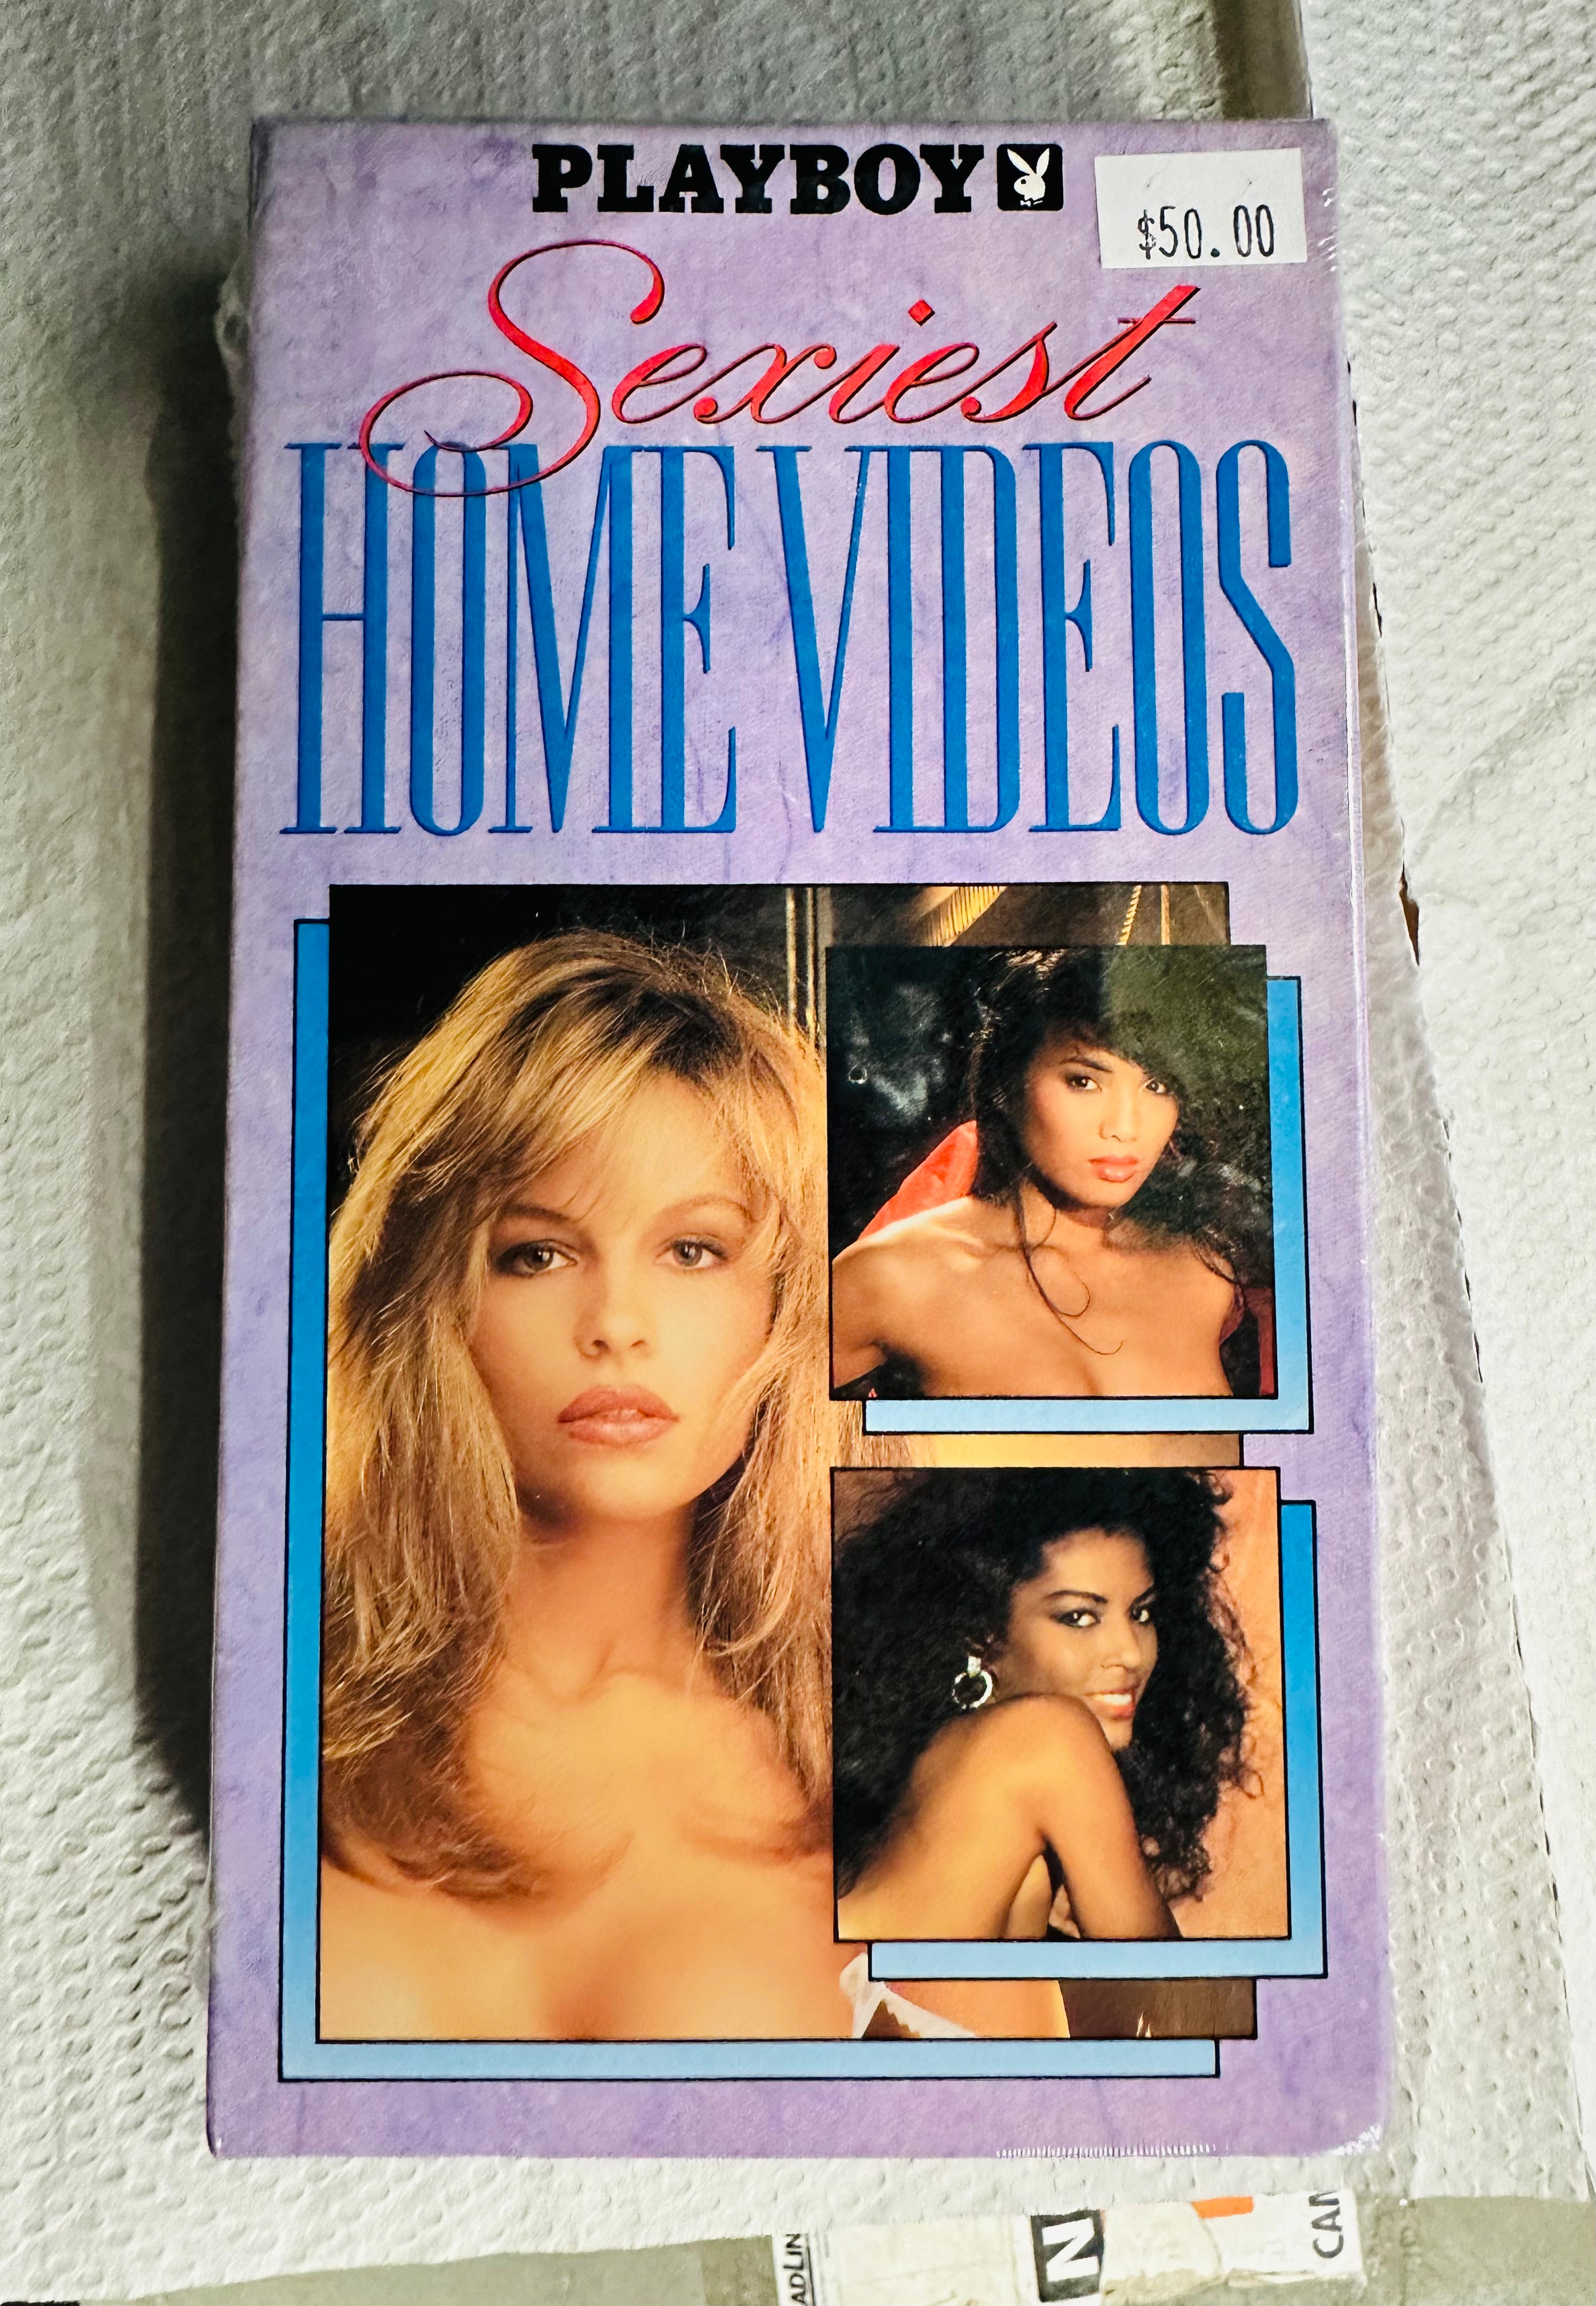 Pamela Anderson Playboy VHS vintage home videos tape 1992